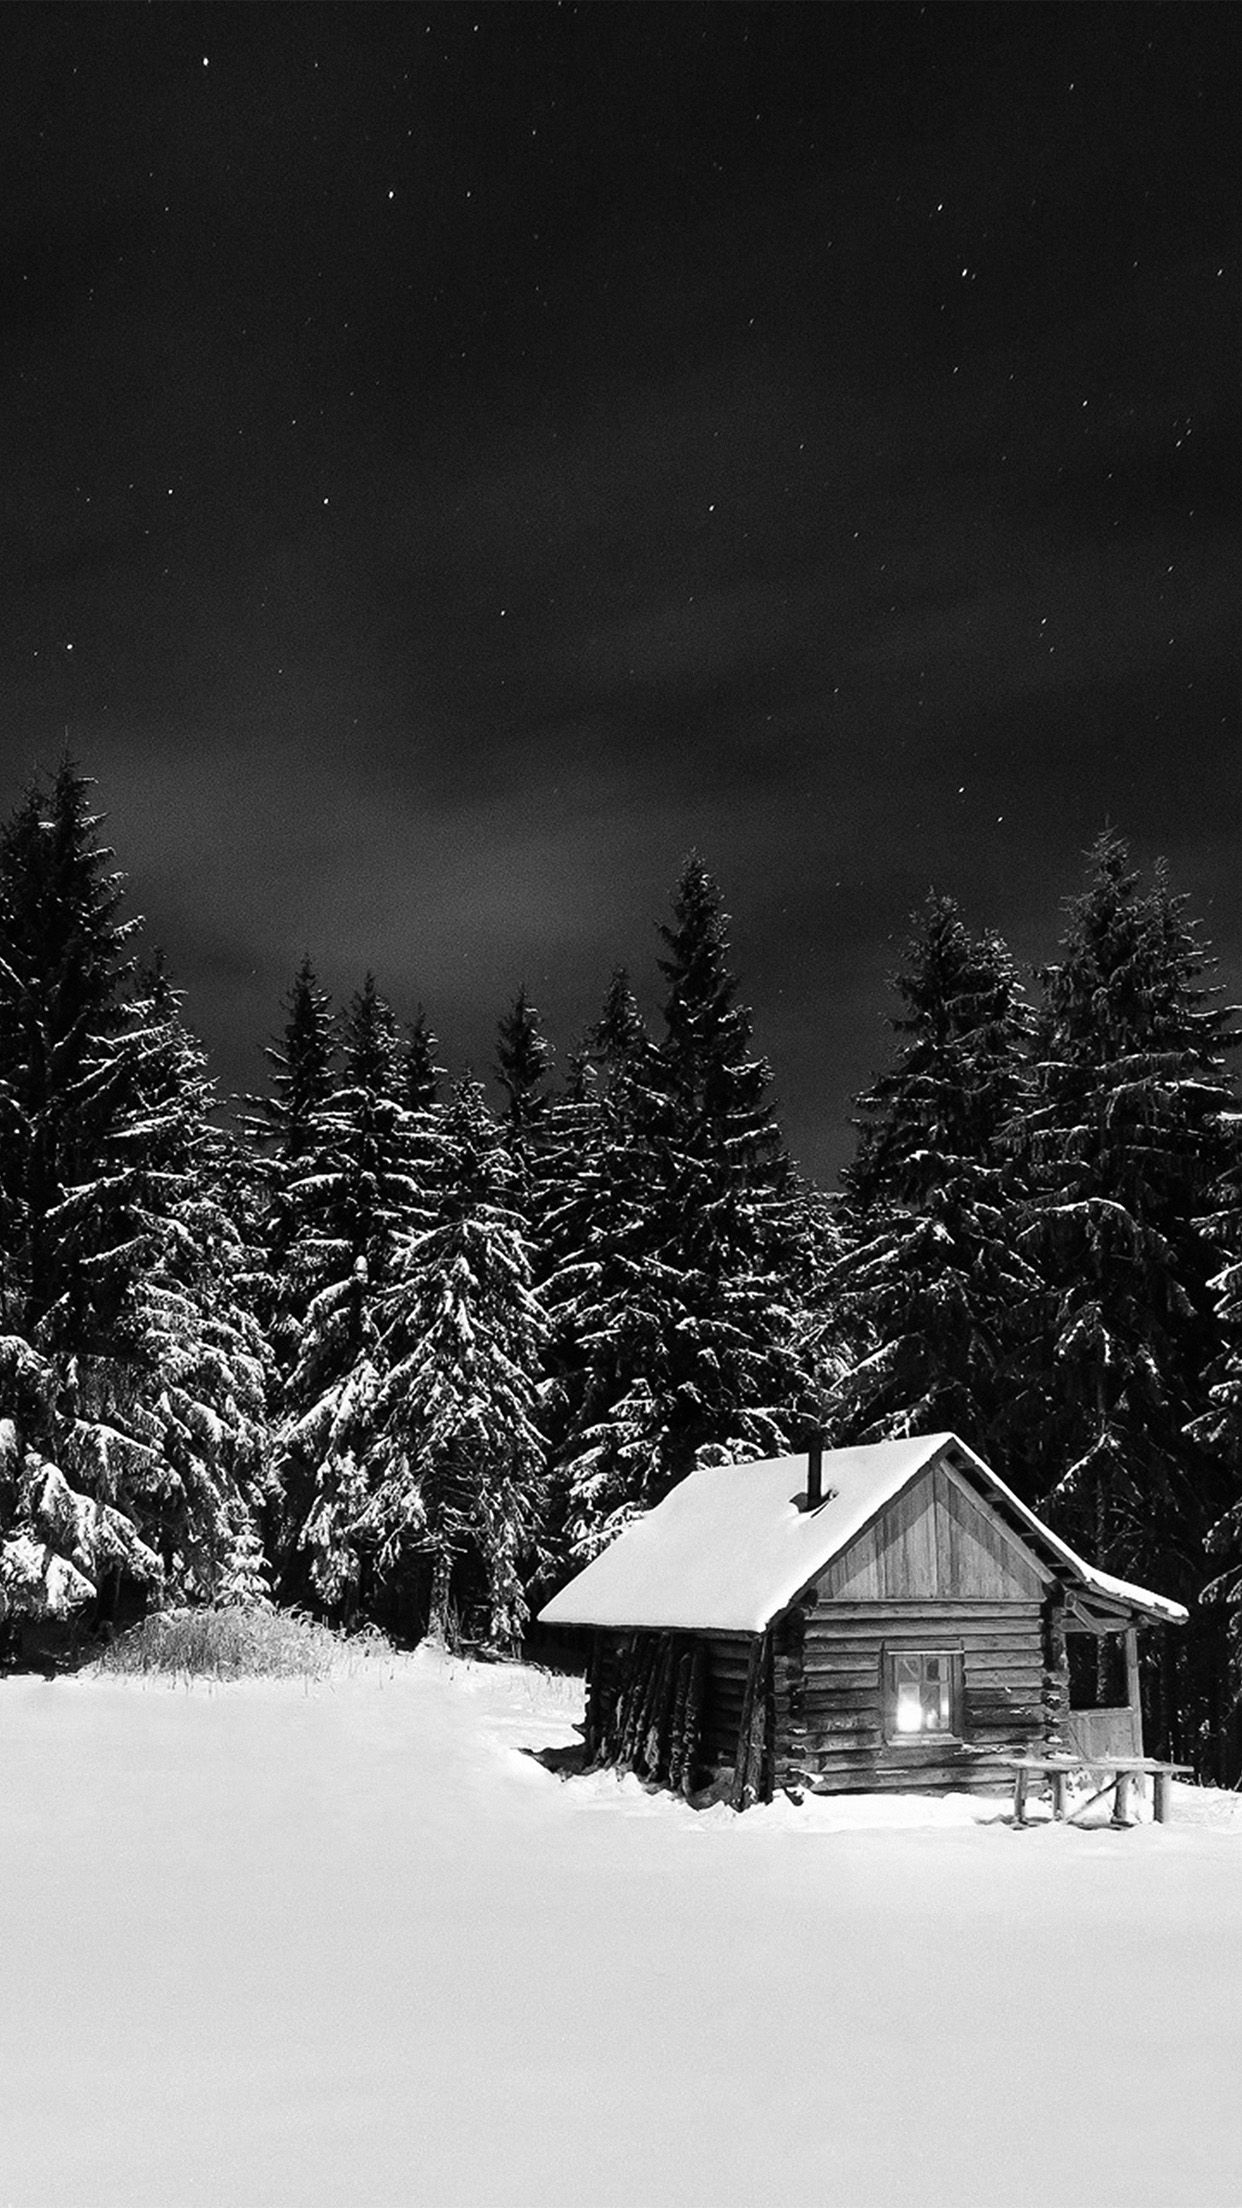 Winter House Night Sky Christmas Starry Bw Dark Wallpaper